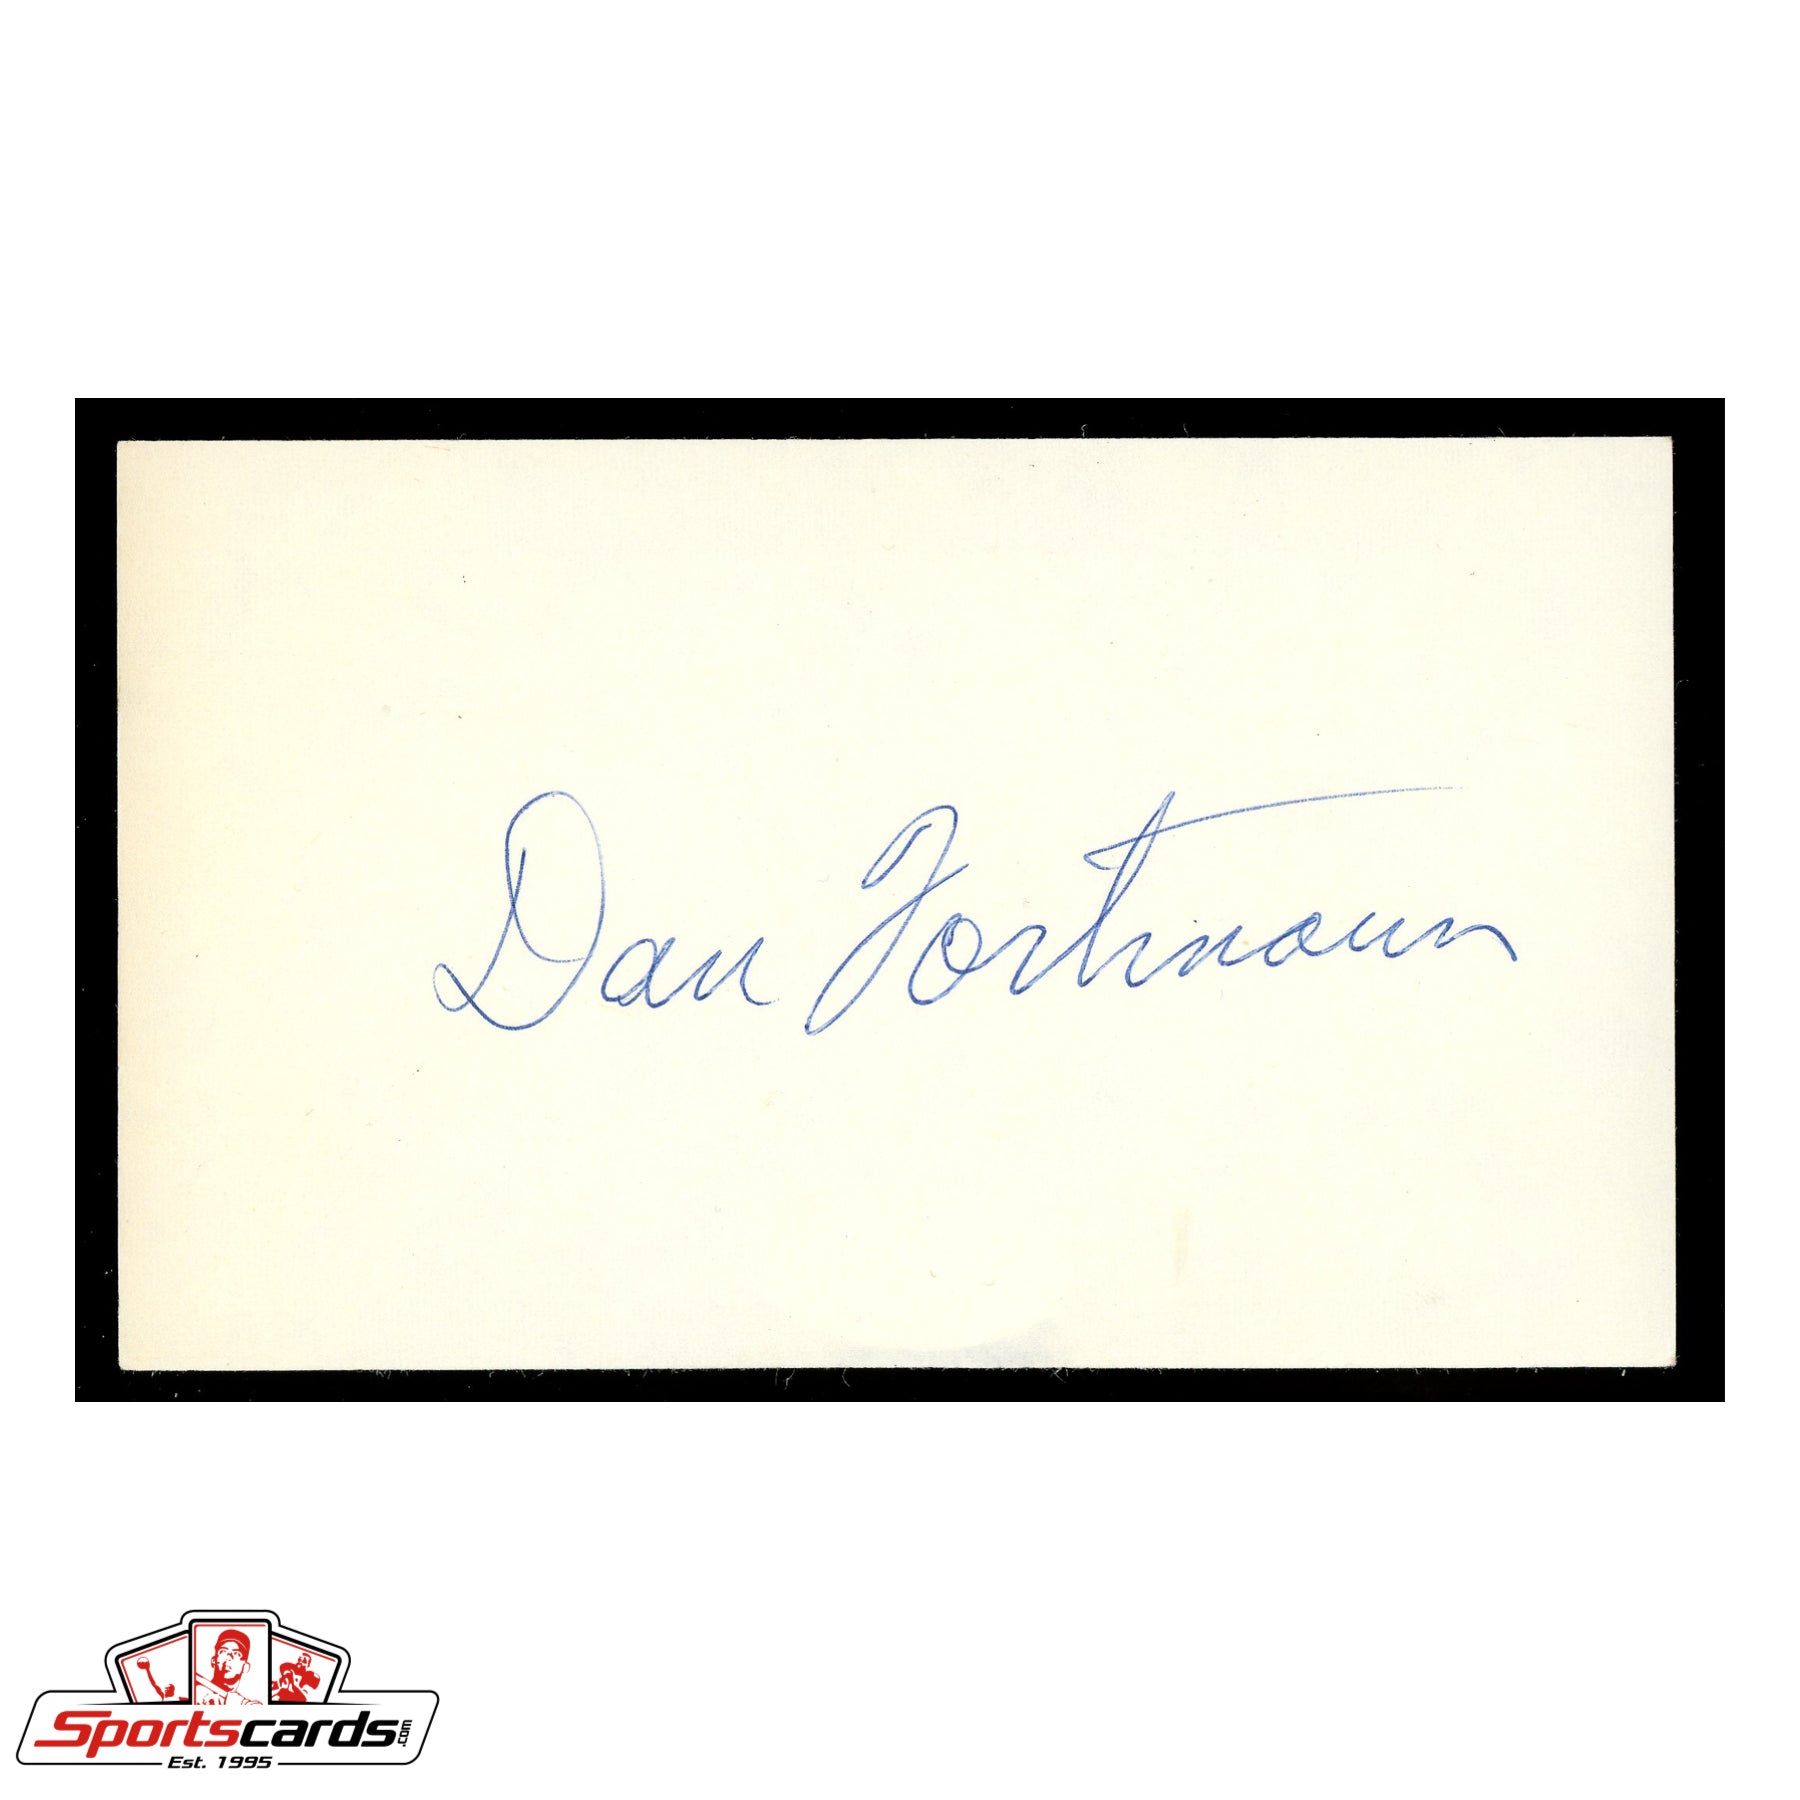 Dan Fortmann Signed Auto 3x5 Index Card JSA - Chicago Bears HOF Legend